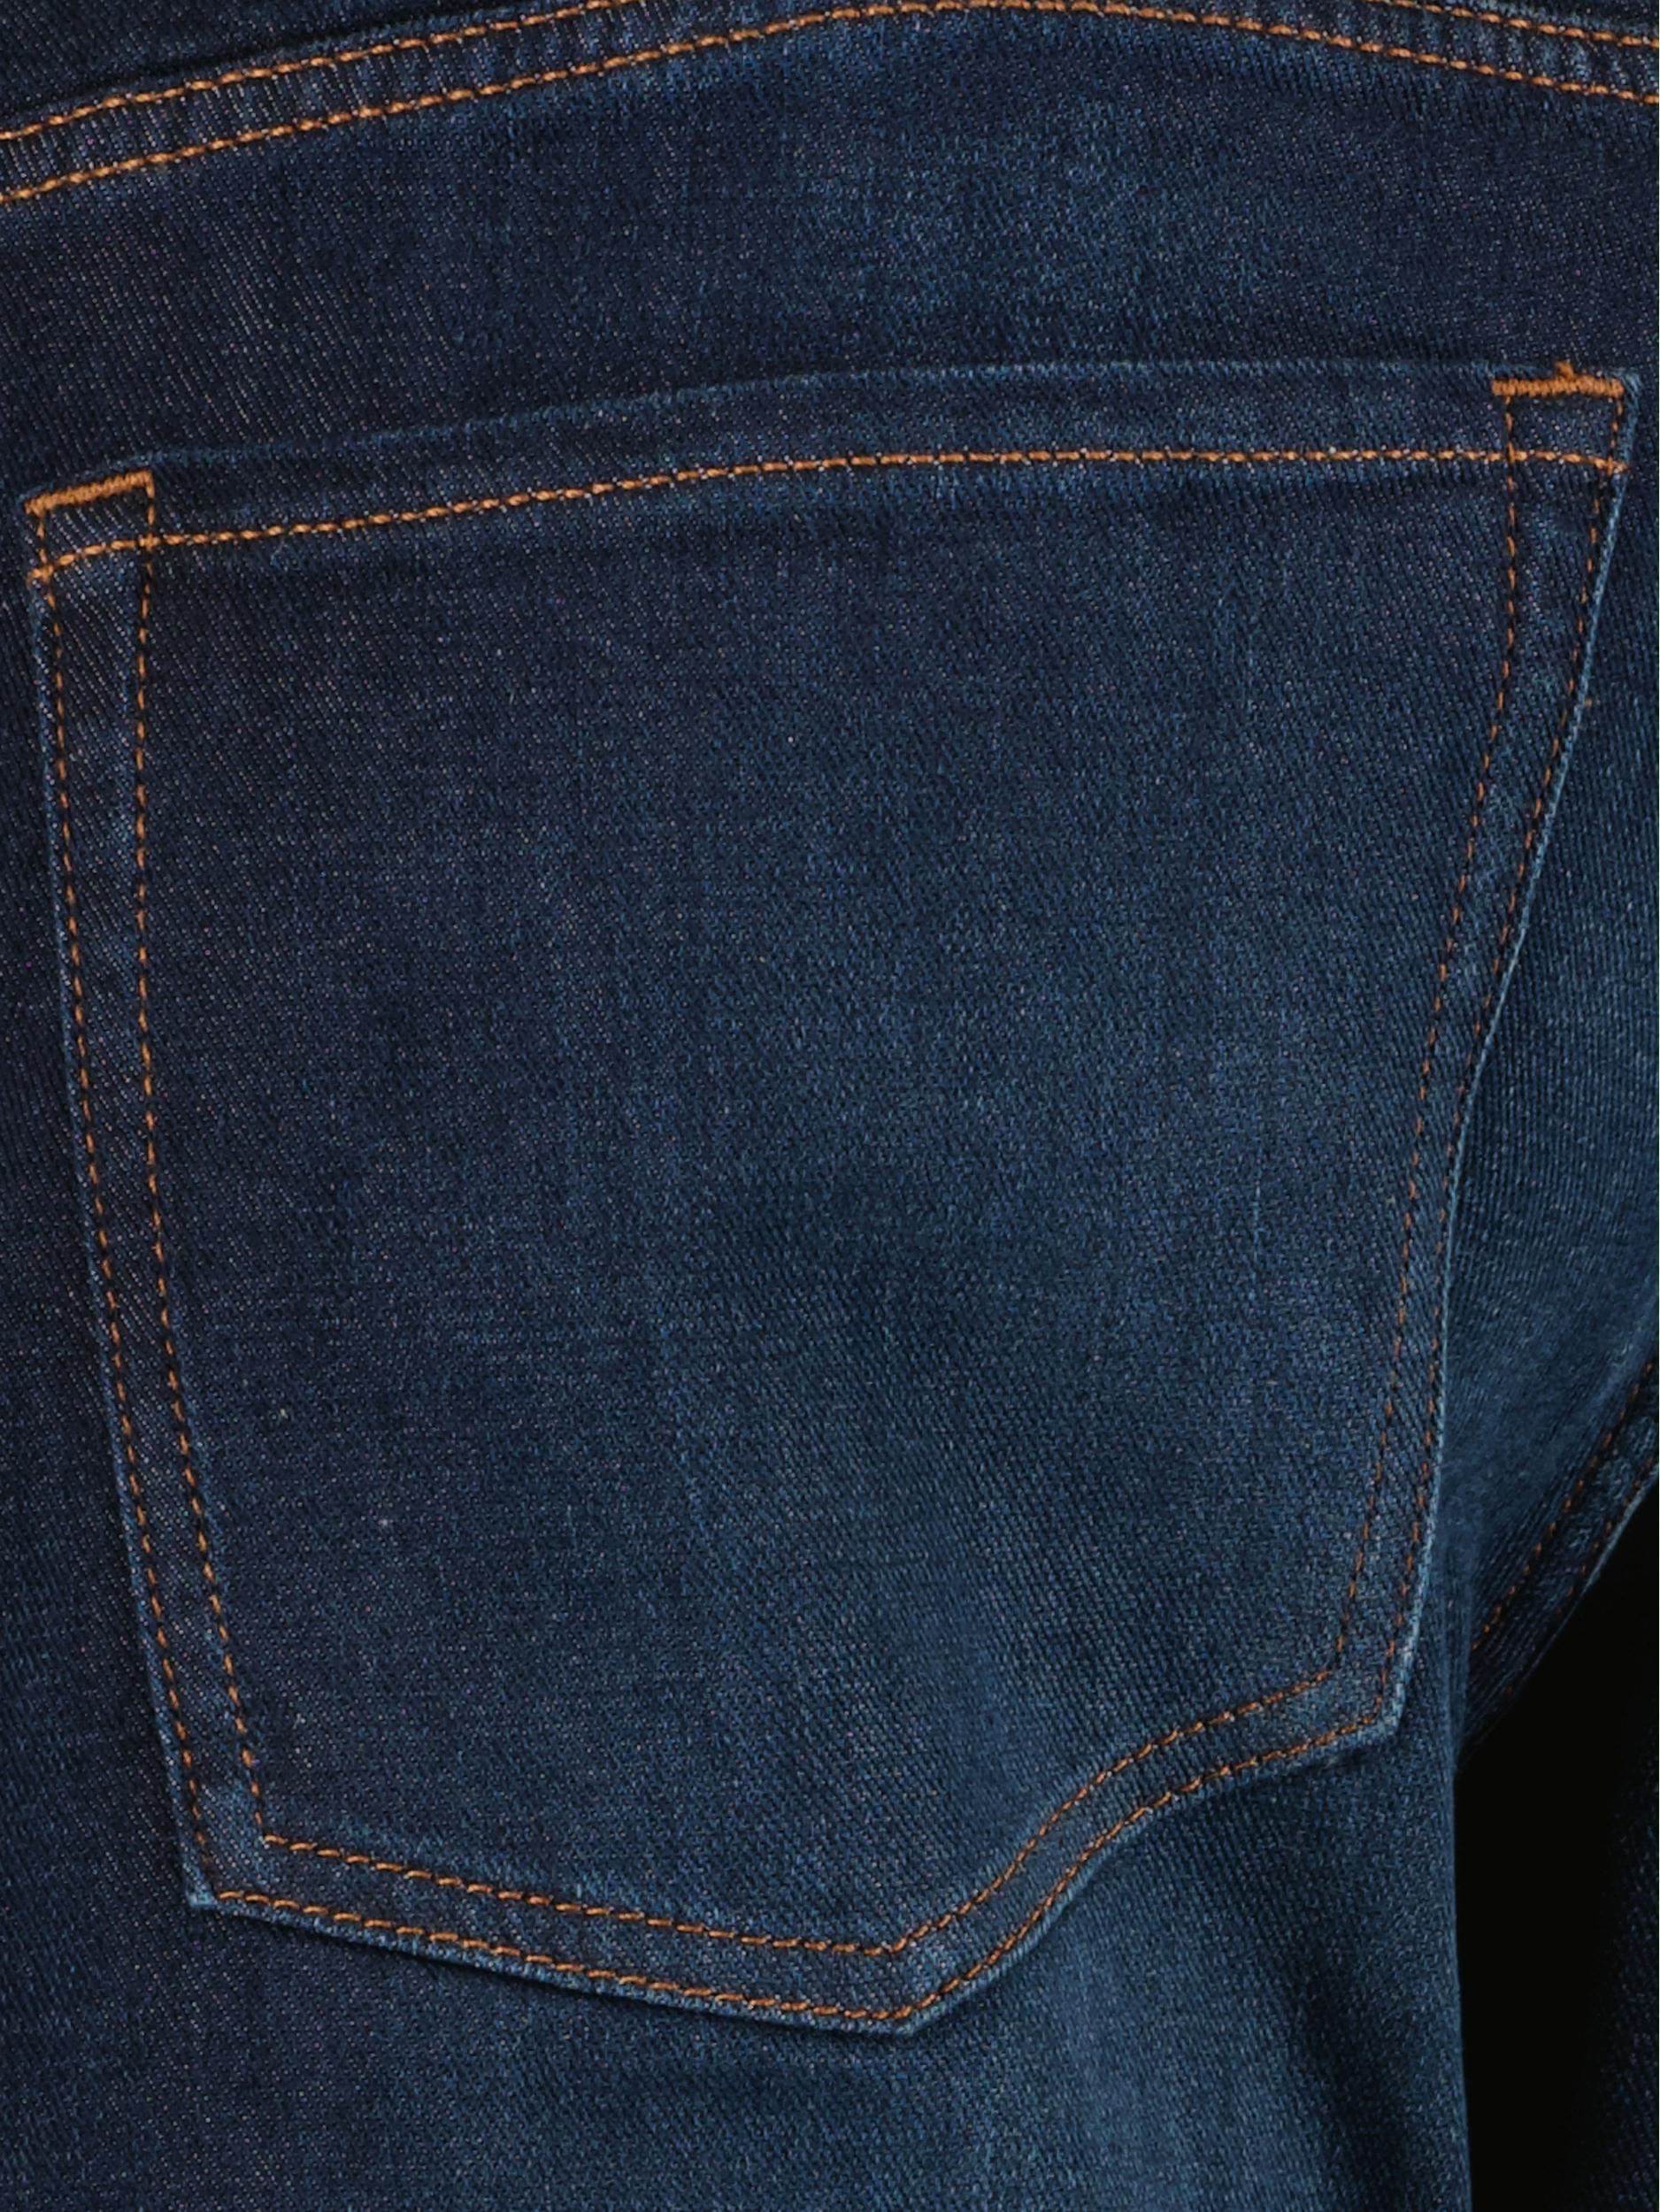 BOSS Black 5-Pocket Jeans Blauw Delaware3-1 10248179 01 50488490/413